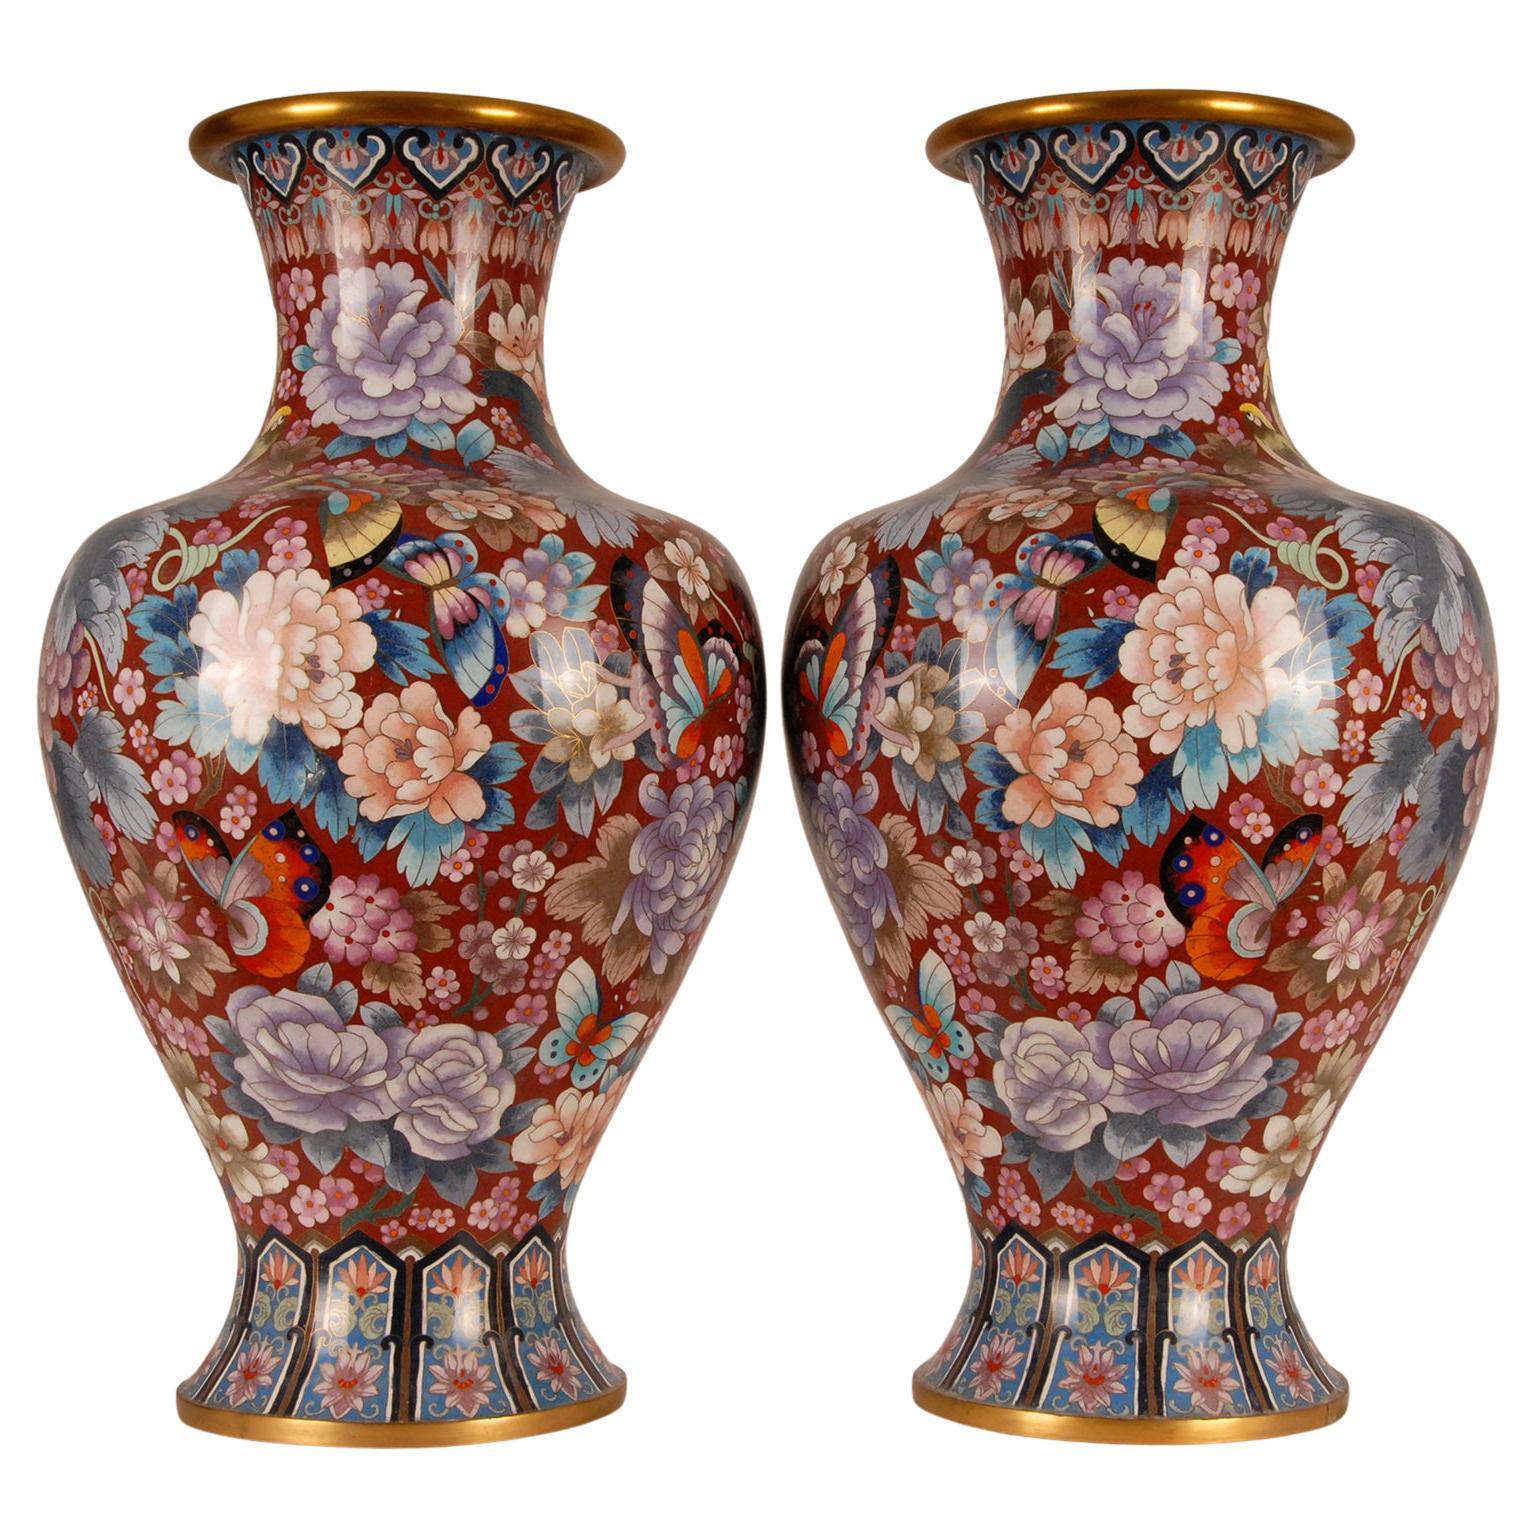 Chinese Cloisonne Gilded Bronze Baluster Vases Enameled Republic Vases a Pair